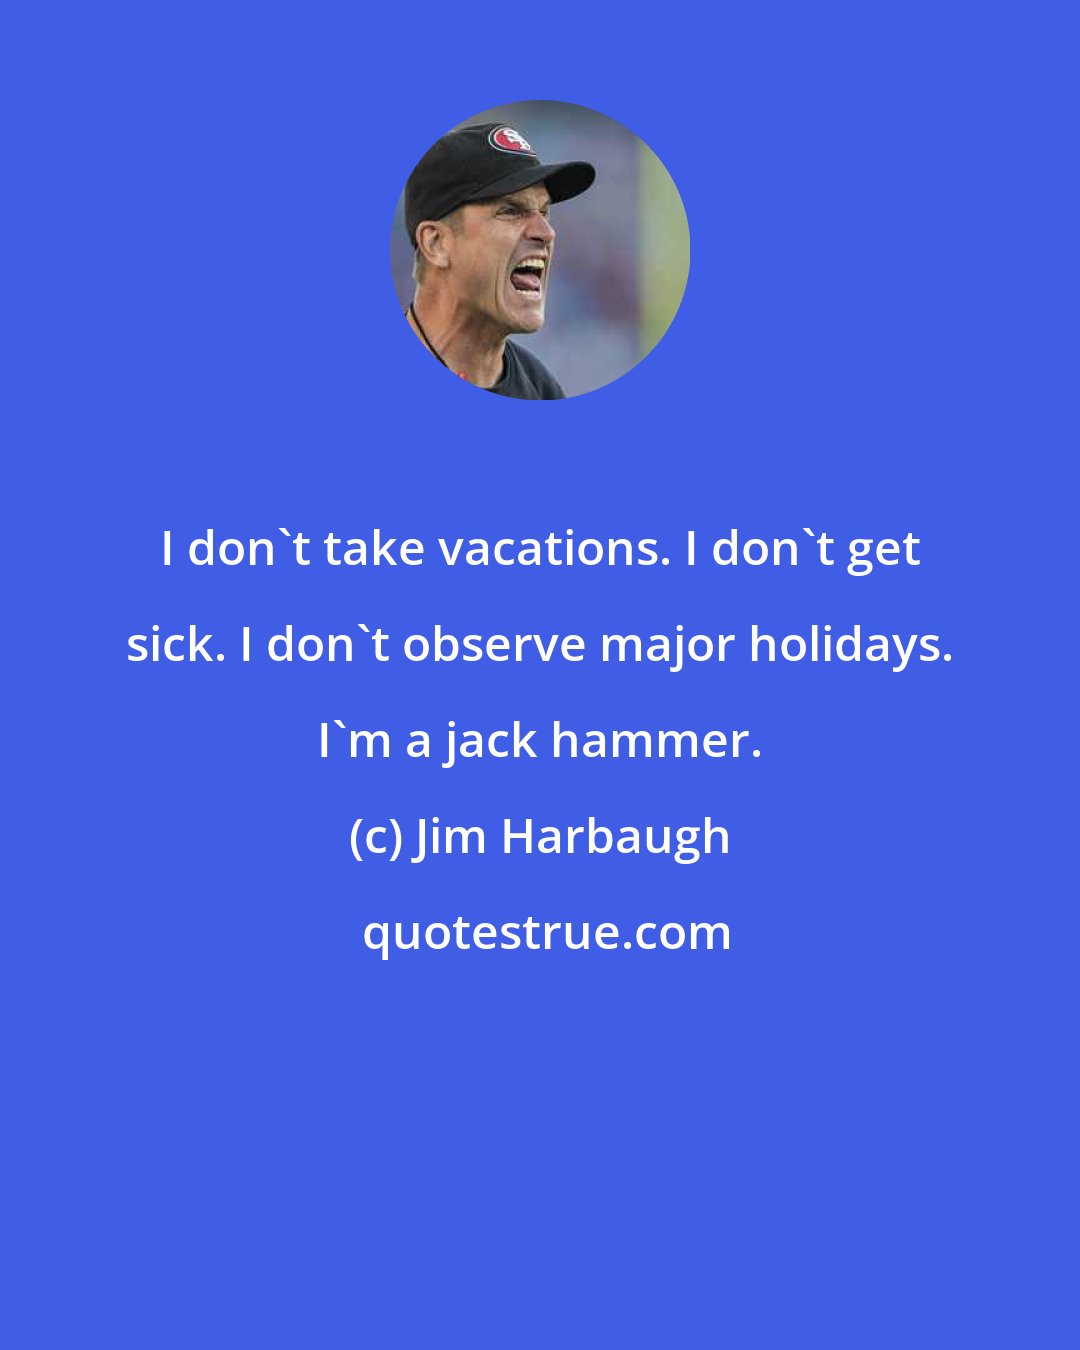 Jim Harbaugh: I don't take vacations. I don't get sick. I don't observe major holidays. I'm a jack hammer.